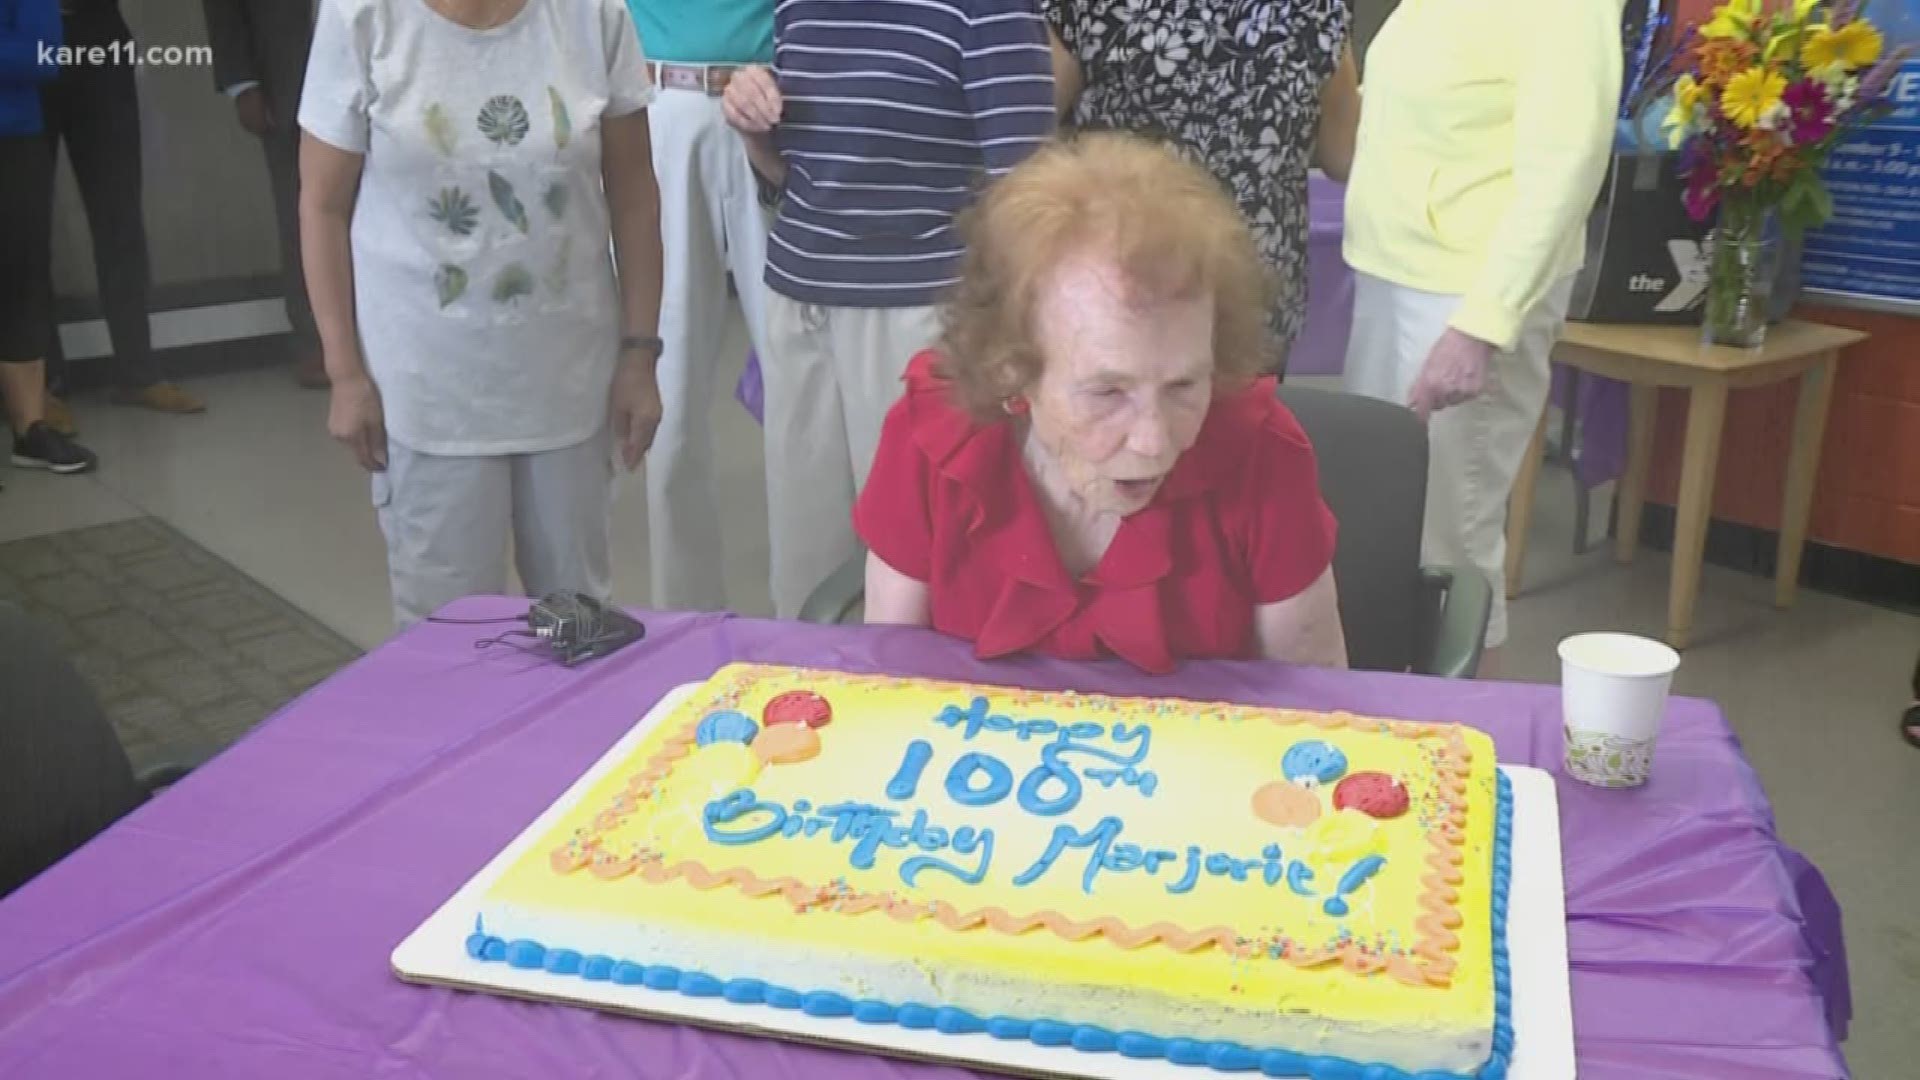 A Minnesota treasure, an inspiration, a little ball of energy. Beloved baker Majorie Johnson turns 100 today.